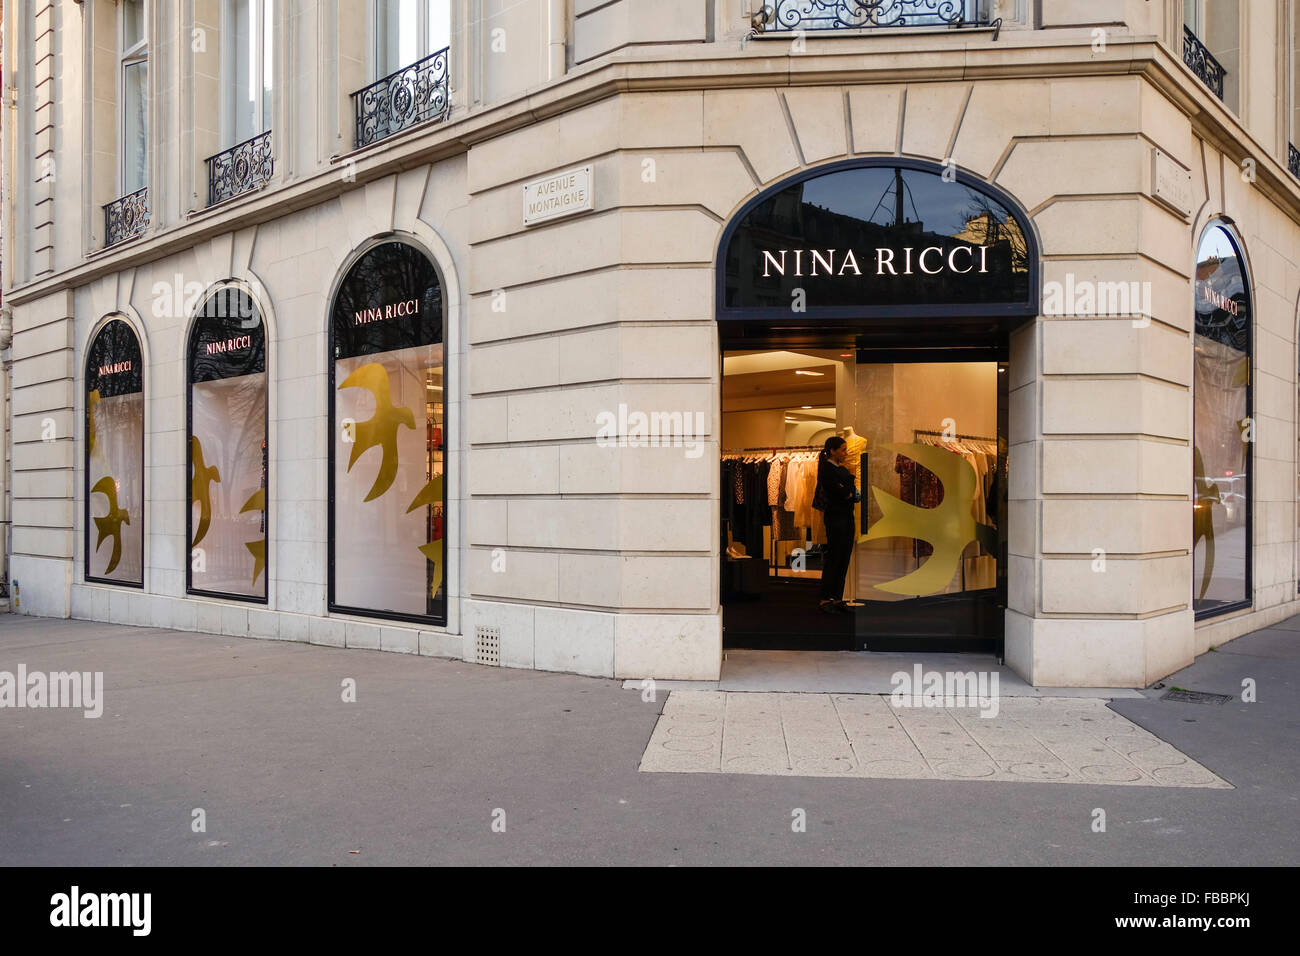 Paris fashion shops hi-res stock photography and images - Alamy